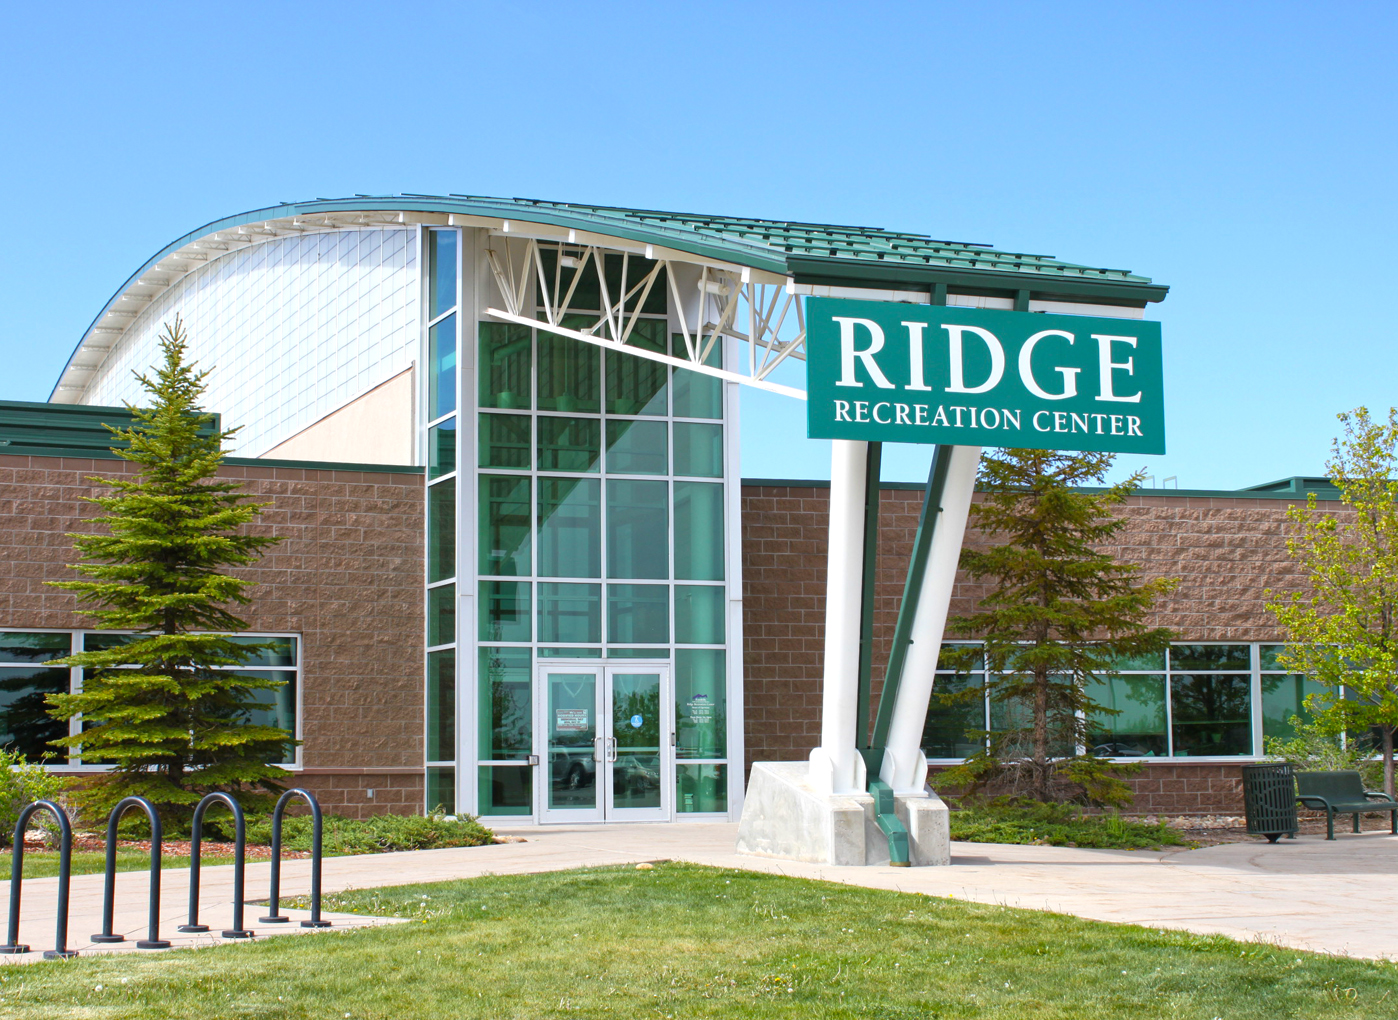 Image of the Ridge Recreation Center building.